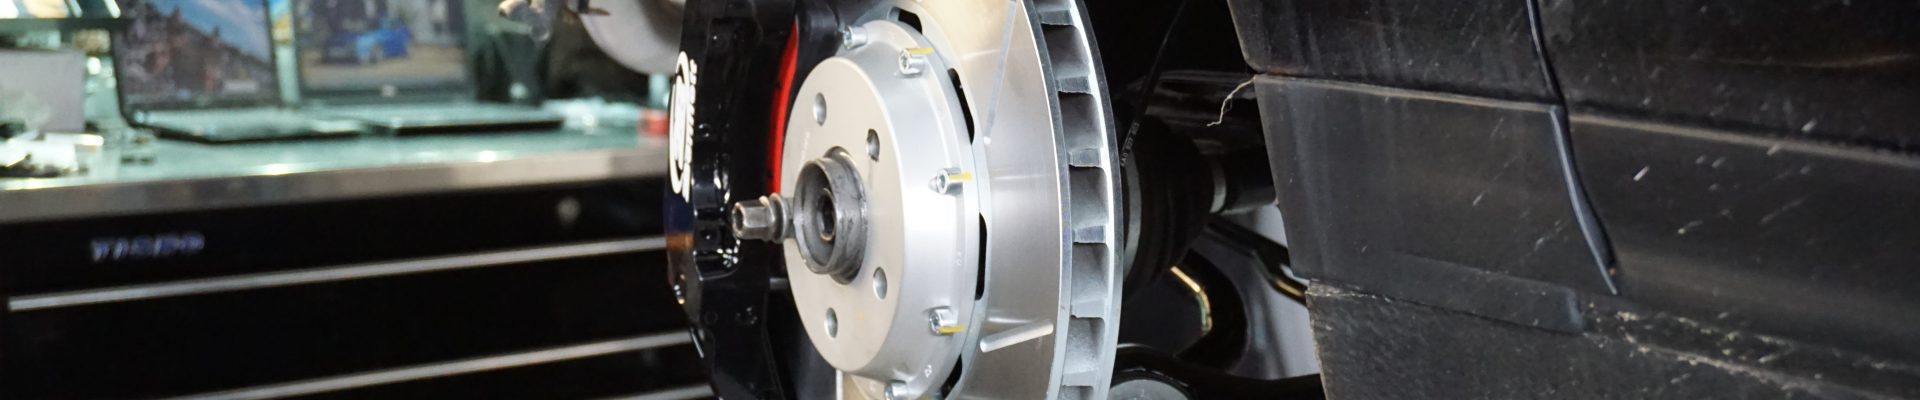 Performance upgrades on brake system